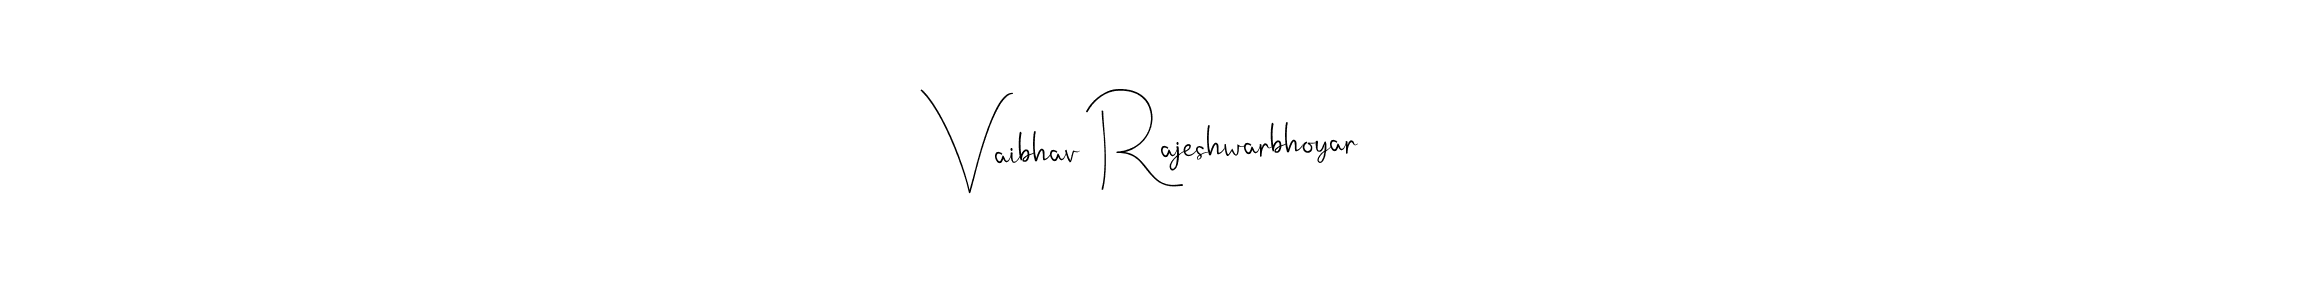 How to Draw Vaibhav Rajeshwarbhoyar signature style? Andilay-7BmLP is a latest design signature styles for name Vaibhav Rajeshwarbhoyar. Vaibhav Rajeshwarbhoyar signature style 4 images and pictures png